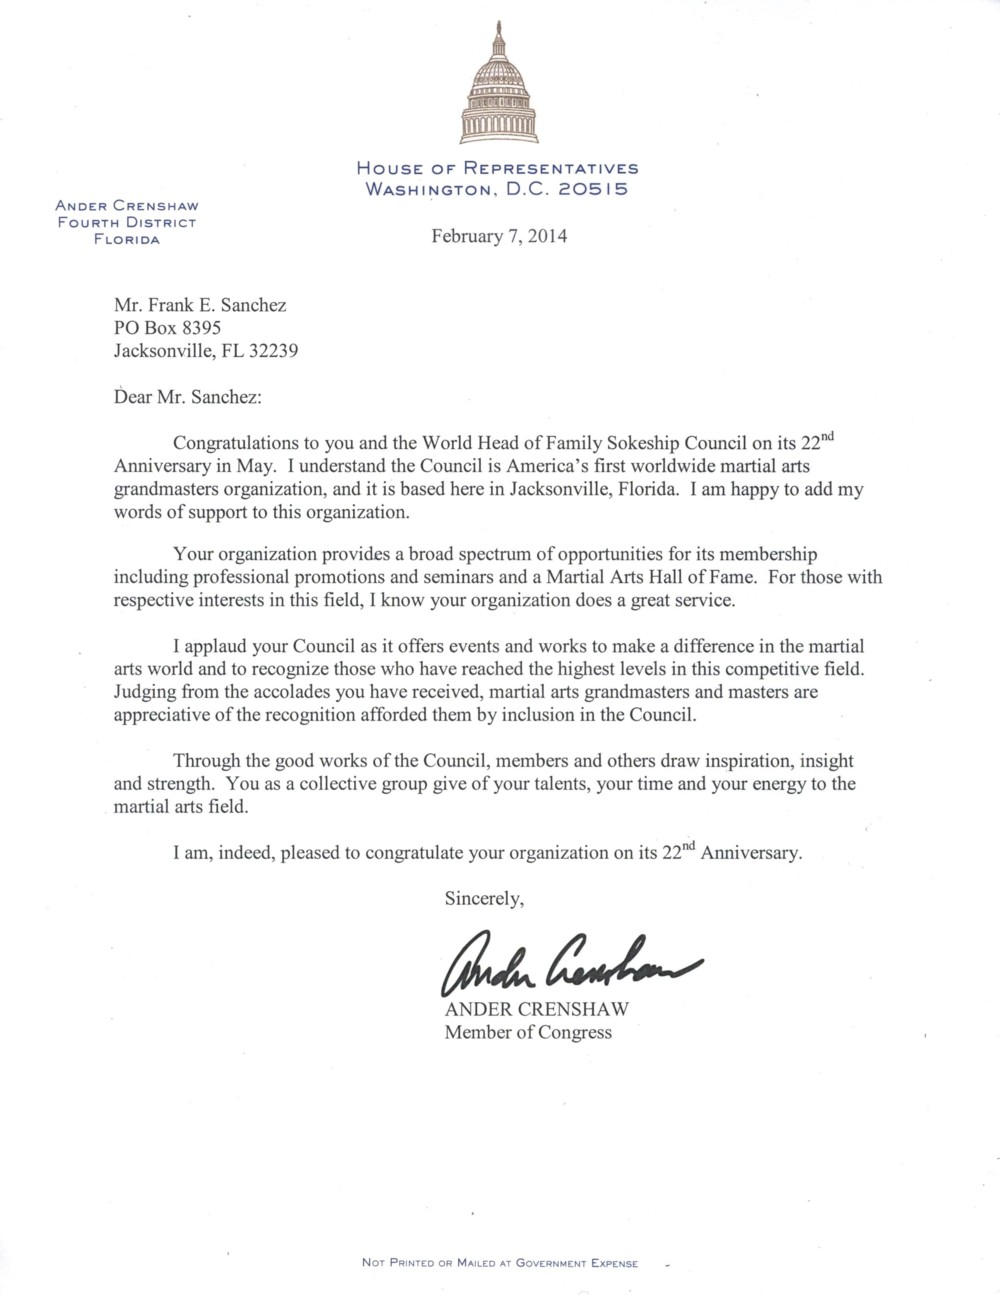 2014 congratulatory letter from Florida Congressman Ander Crenshaw